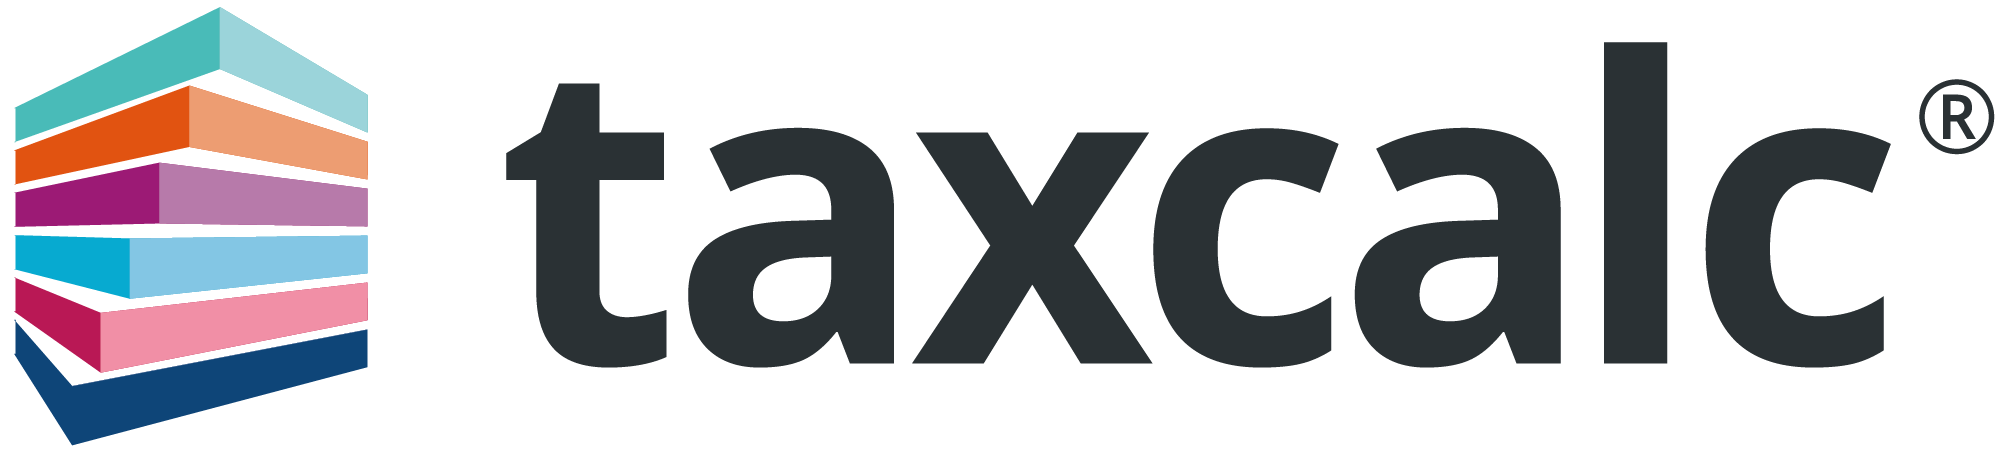 Tax Calc logo